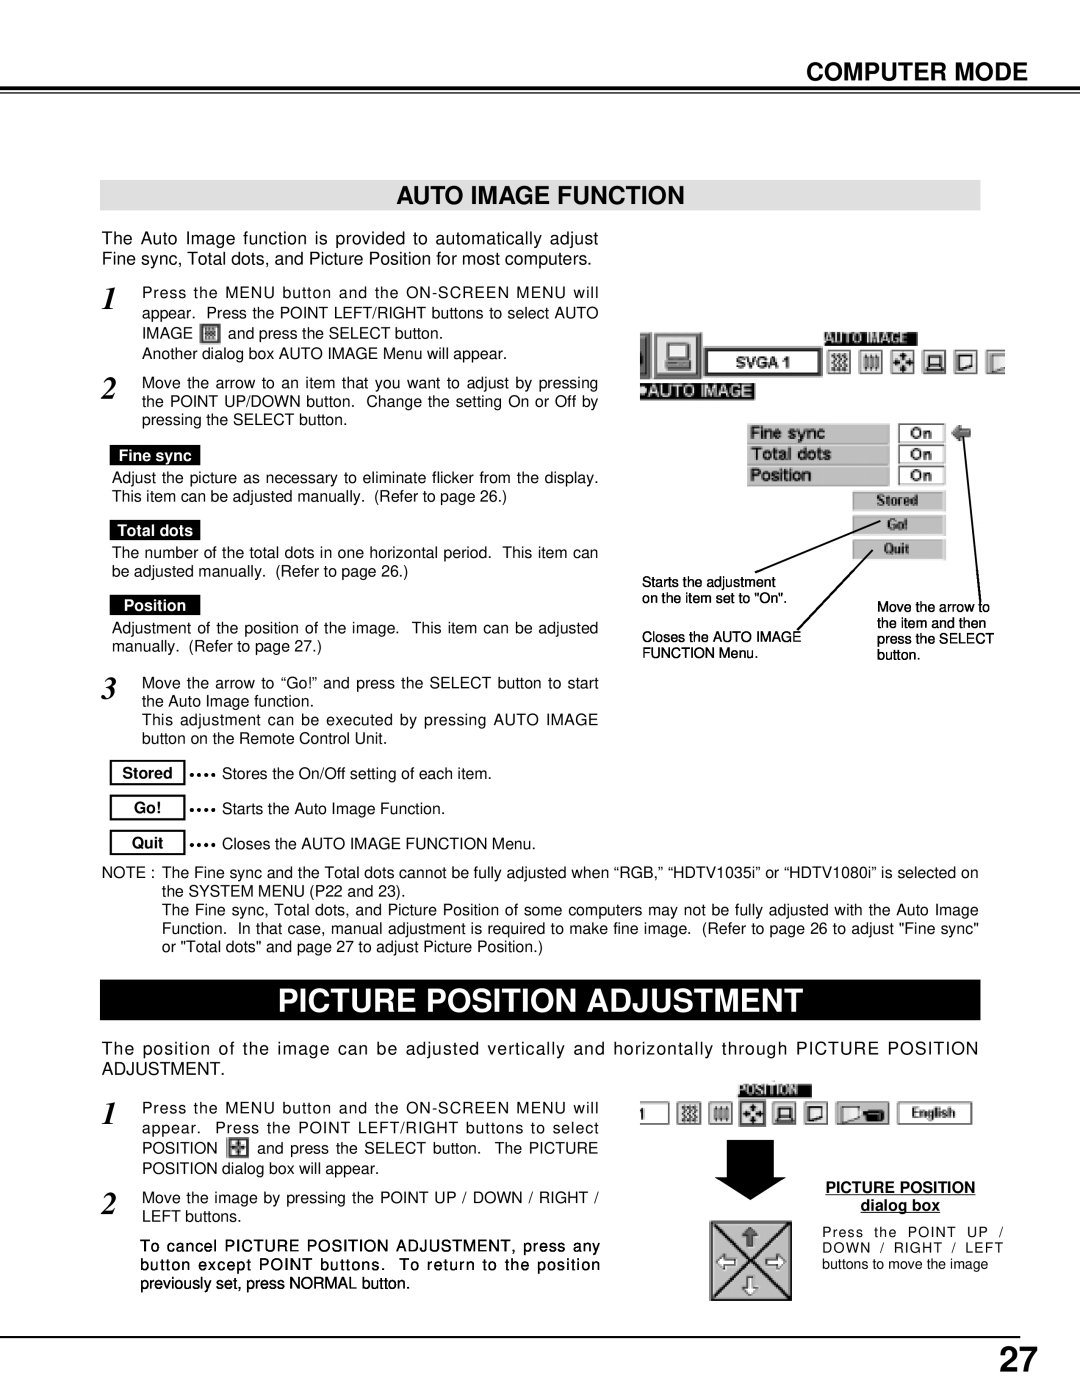 BOXLIGHT XP-5t manual Picture Position Adjustment, Computer Mode Auto Image Function, Fine sync, Total dots 